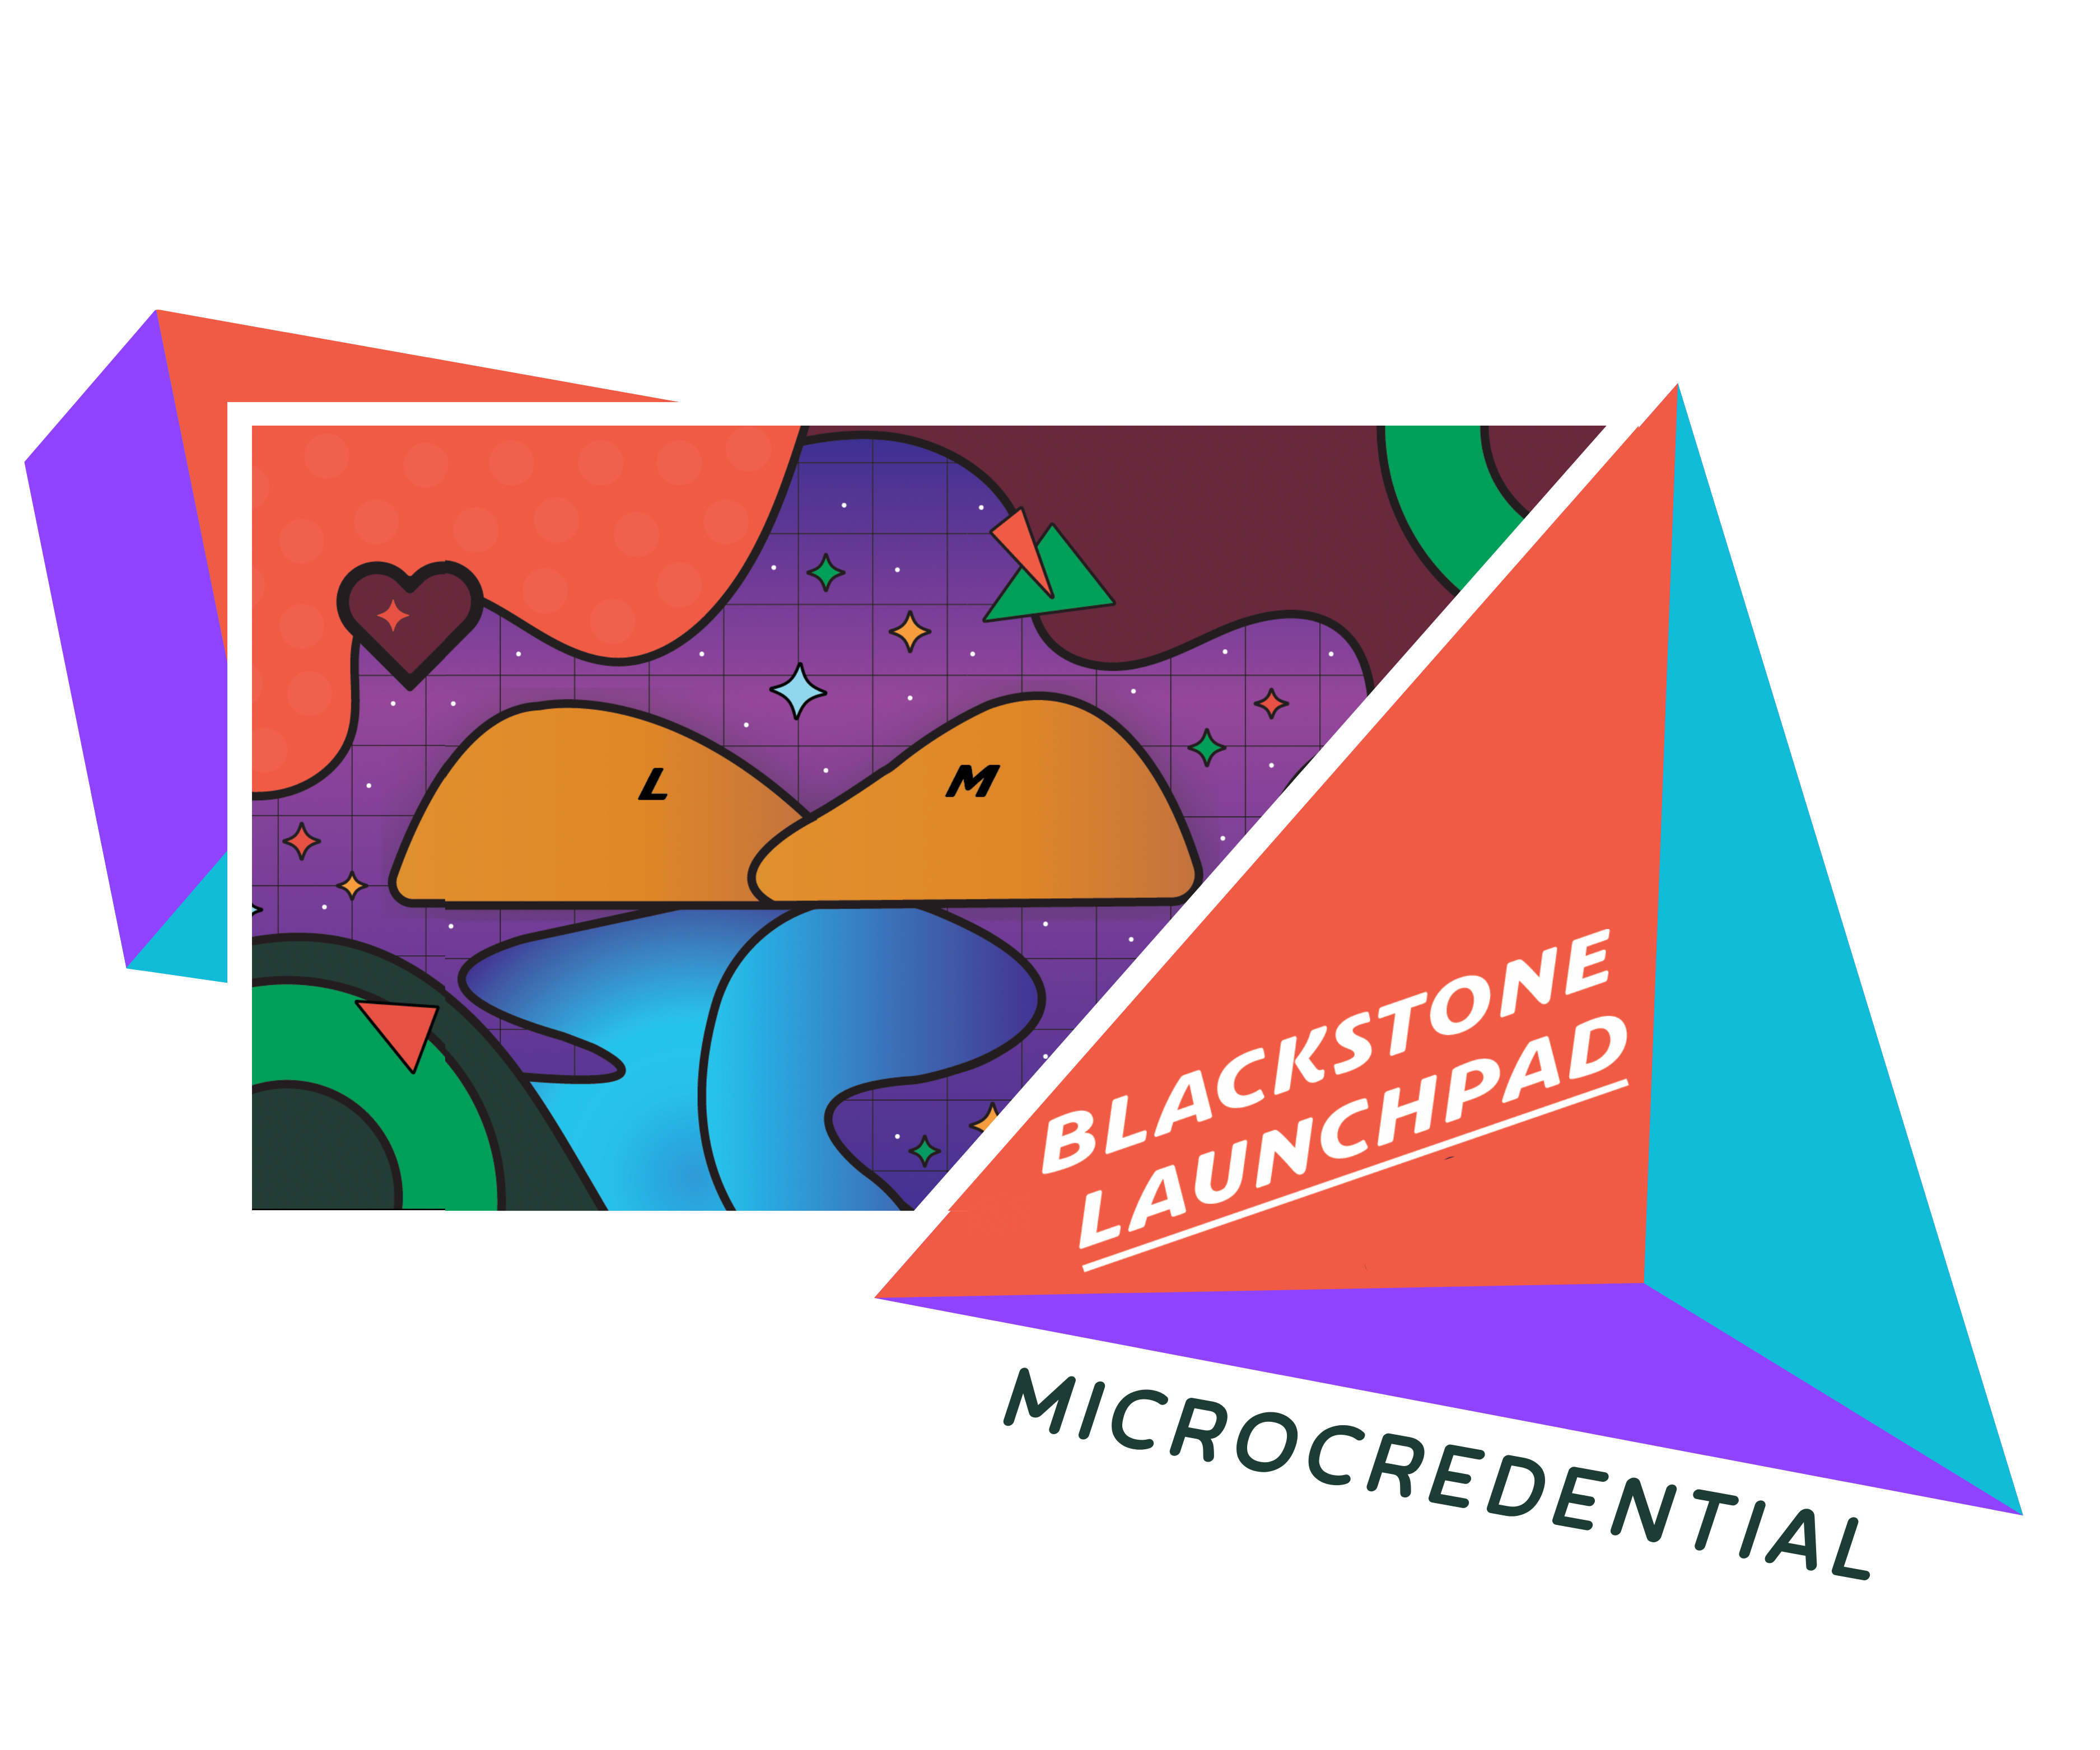 blackstone-launchpad-micro-credential